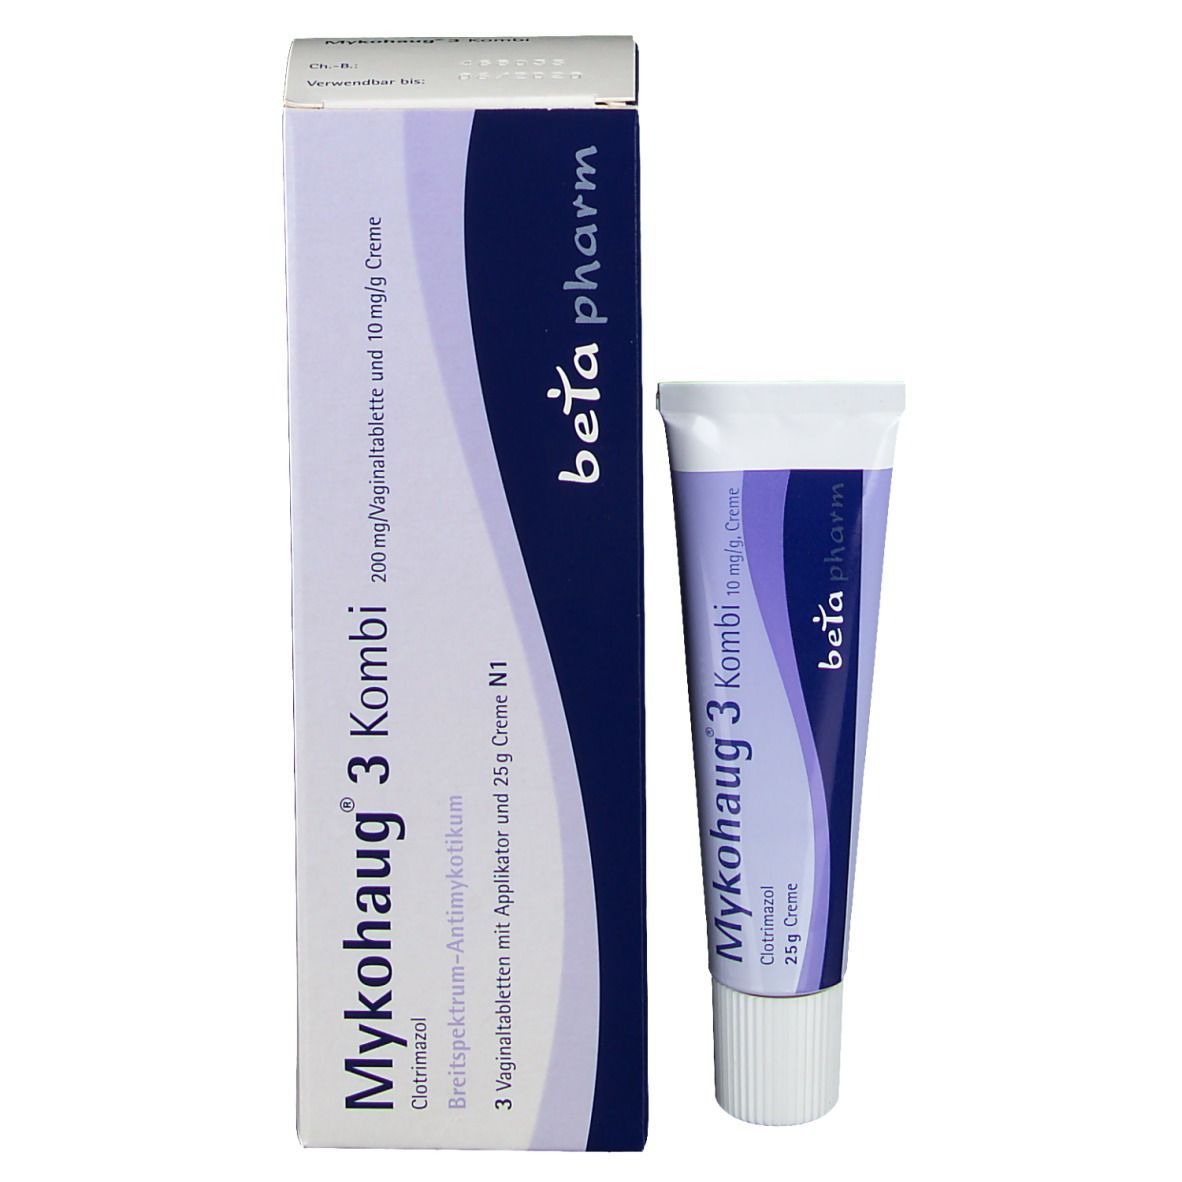 Mykohaug® 3 Kombi 200 mg/ Vaginaltablette 10 mg/g Creme